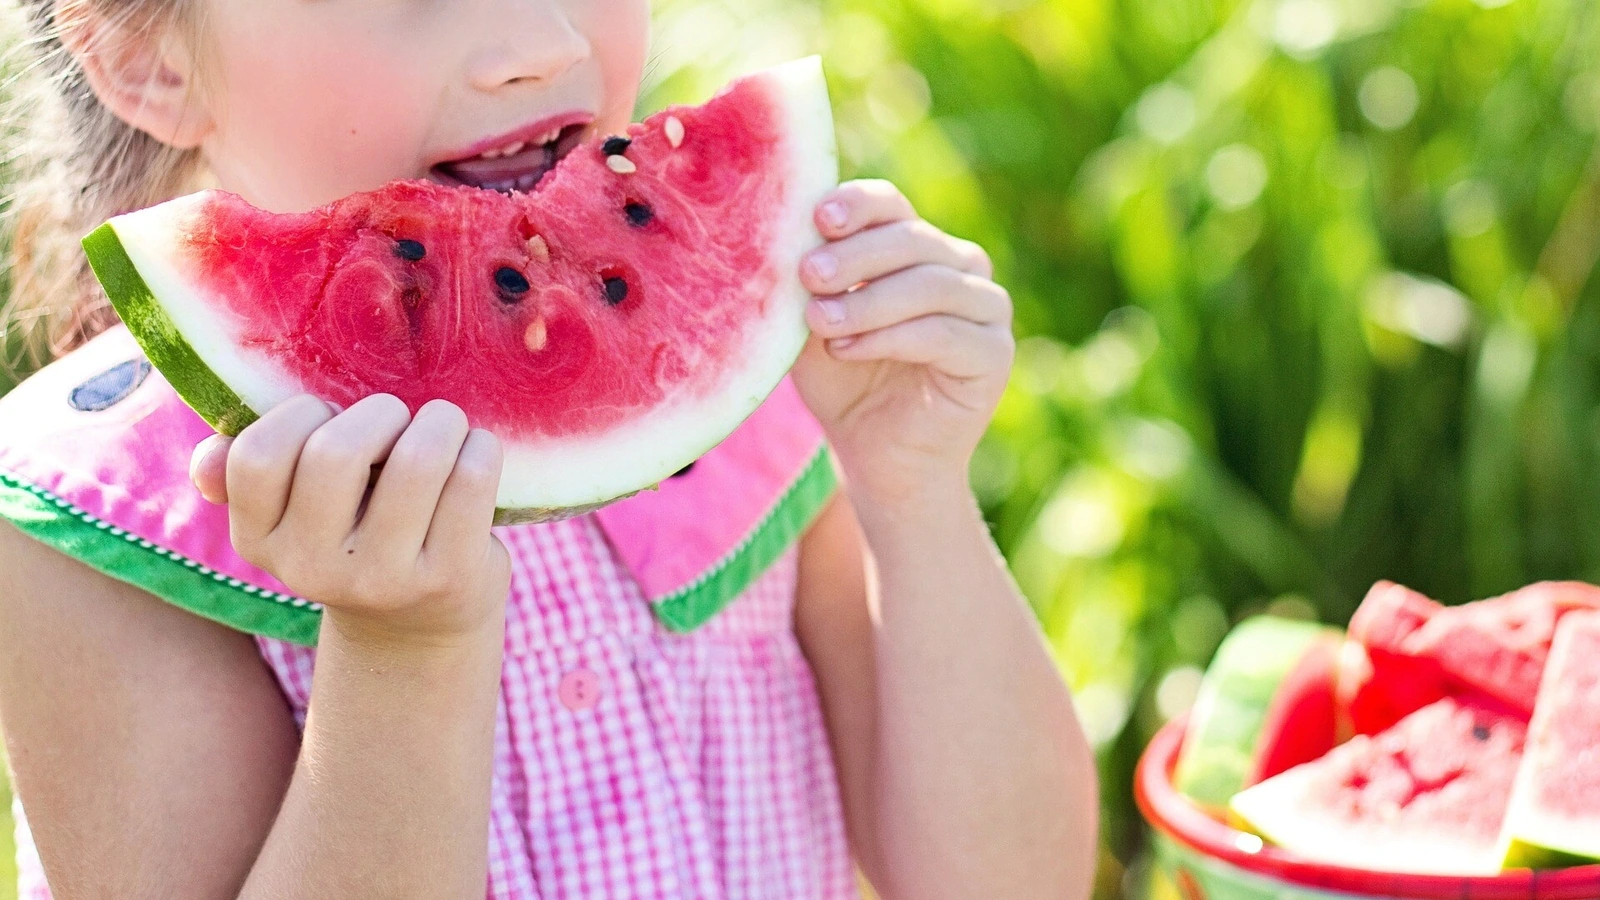 Food for children: Here’s how parents can instil seasonal food habits in kids